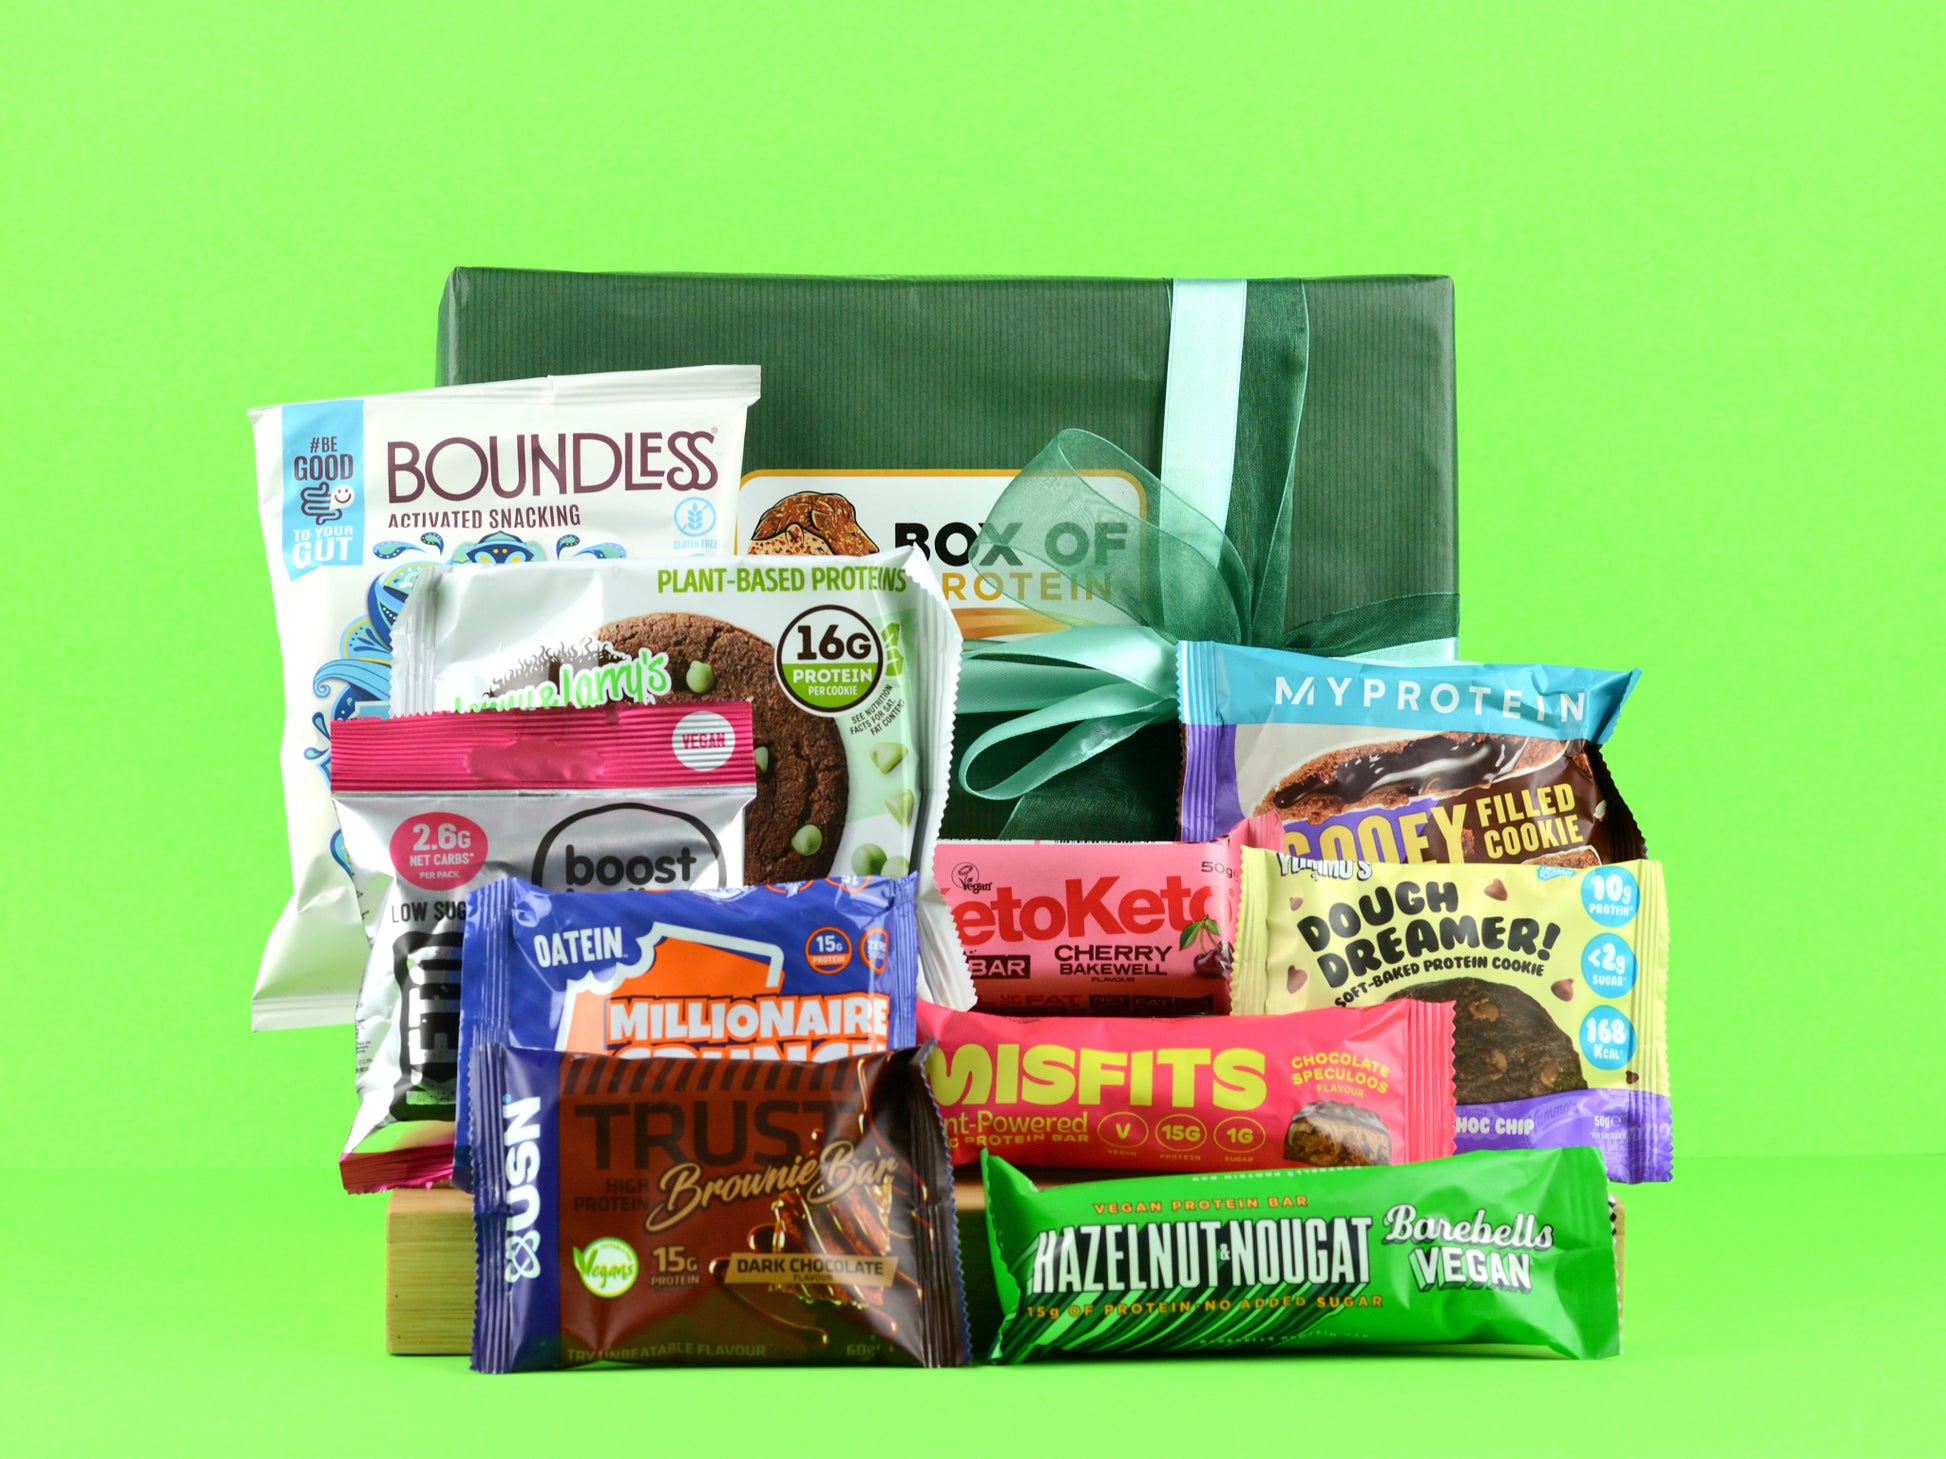 Box Of Protein | Vegan Diet Box | Diet Protein Boxes | Protein Snacks Hamper | Gym Gift Snacks | Oatein, USN, Boundless, Barebells, MyProtein, Misfits, Boostball, Keto Keto